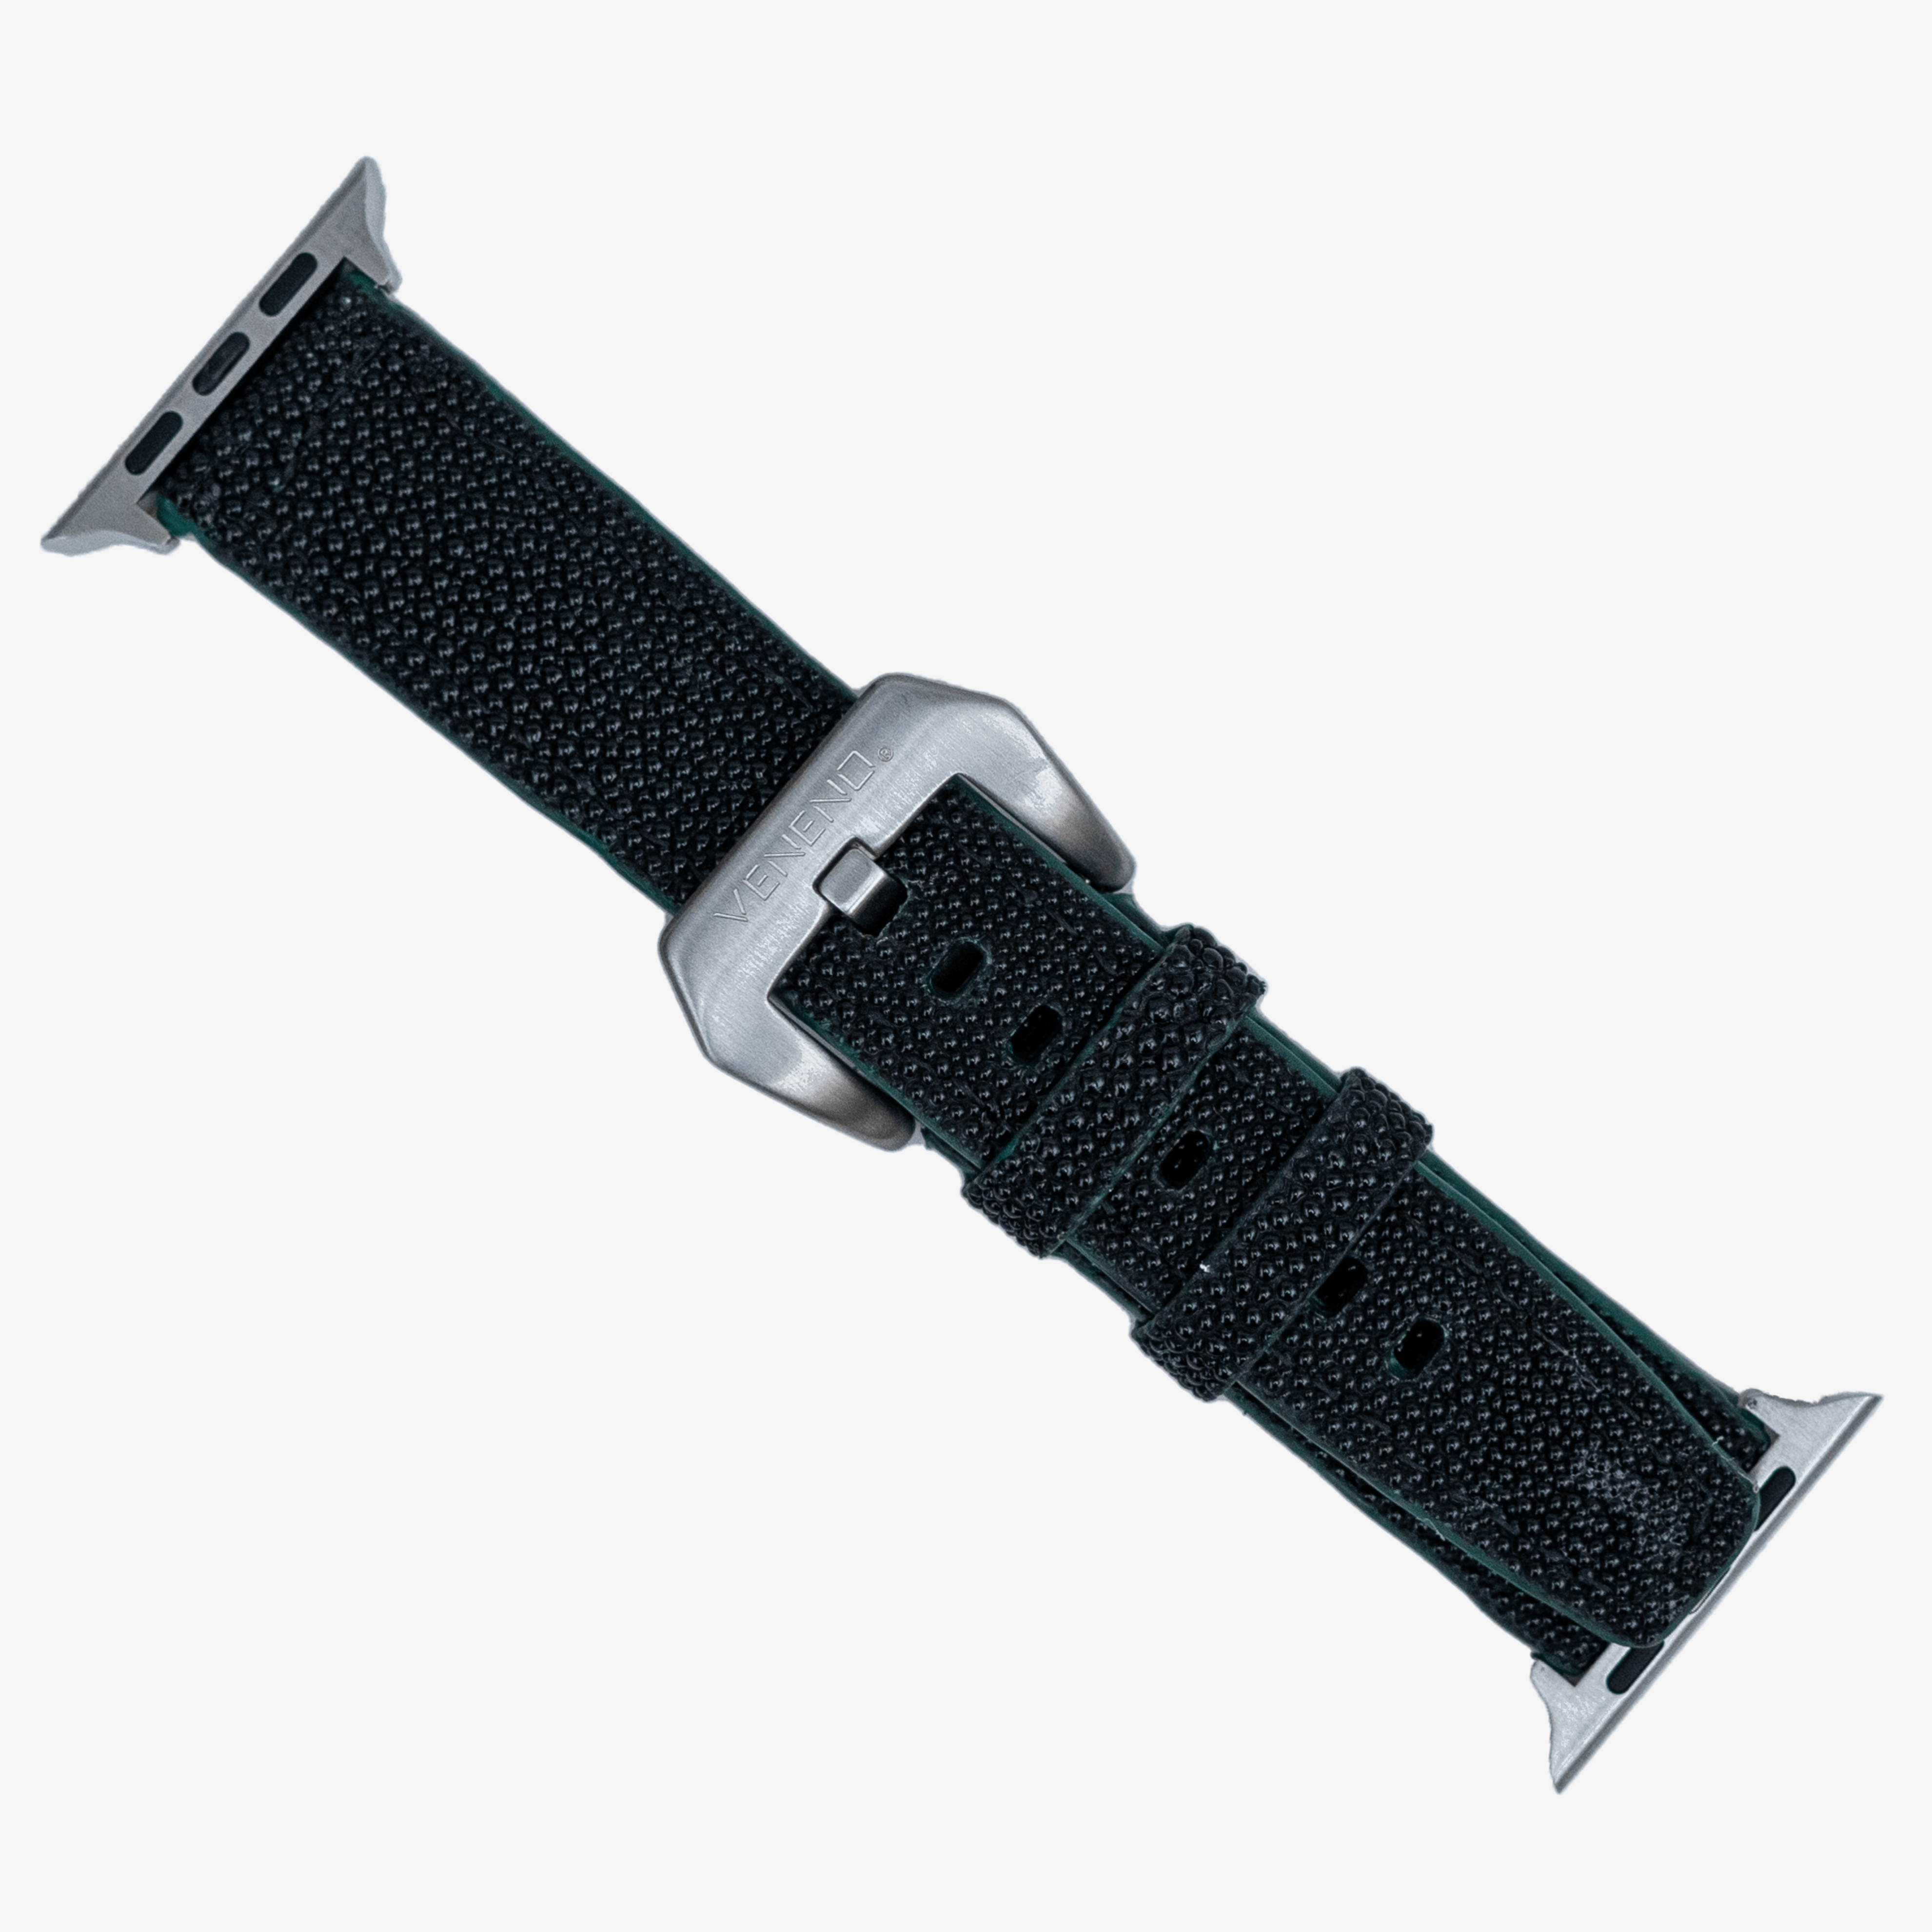 Veneno "Apple Watch Straps 38/40/41 mm" Stingray Black-Green